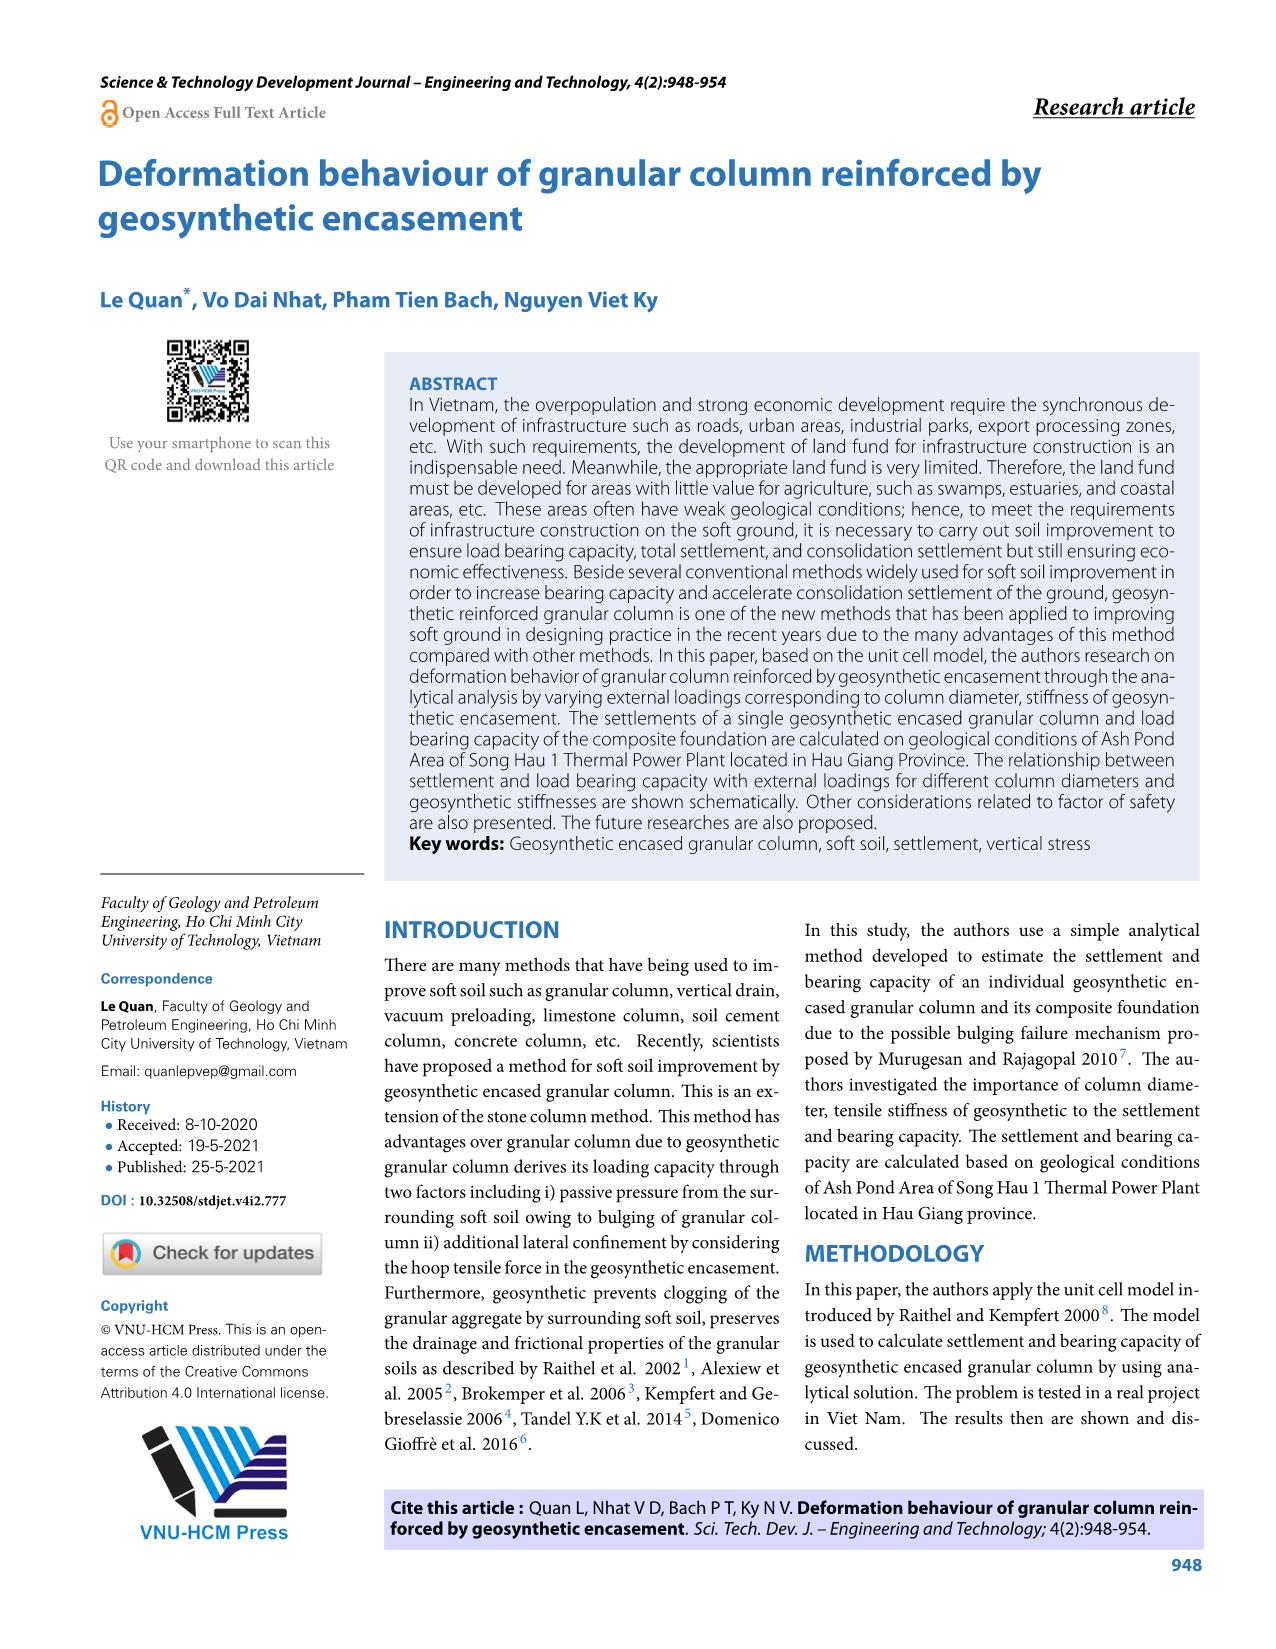 Deformation behaviour of granular column reinforced by geosynthetic encasement trang 1